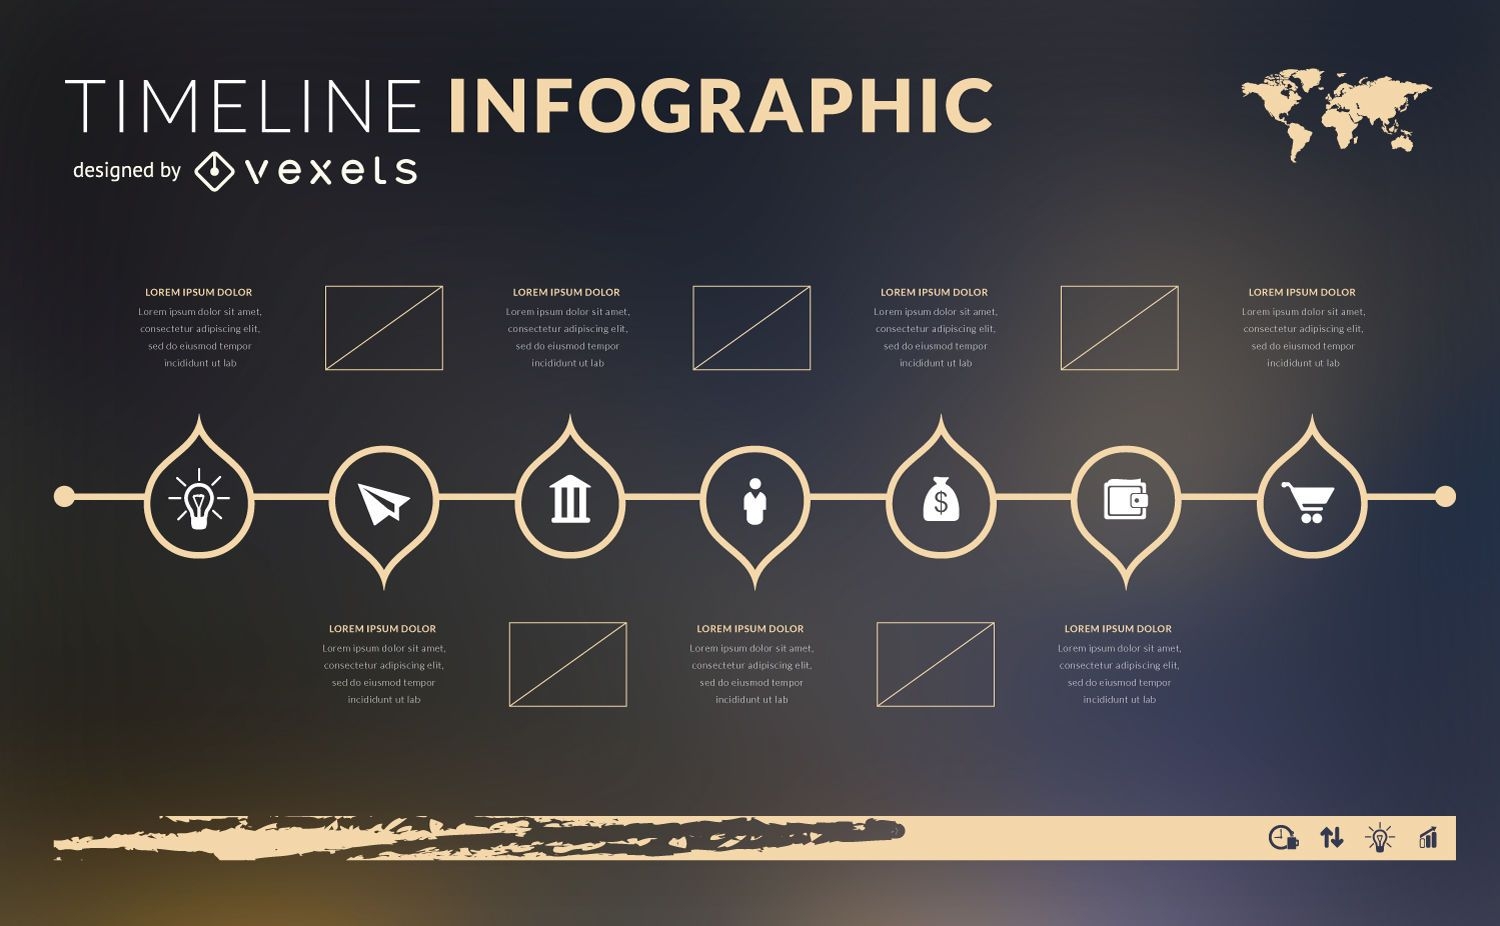 Flat Design Timeline Infographic Template - Vector Download